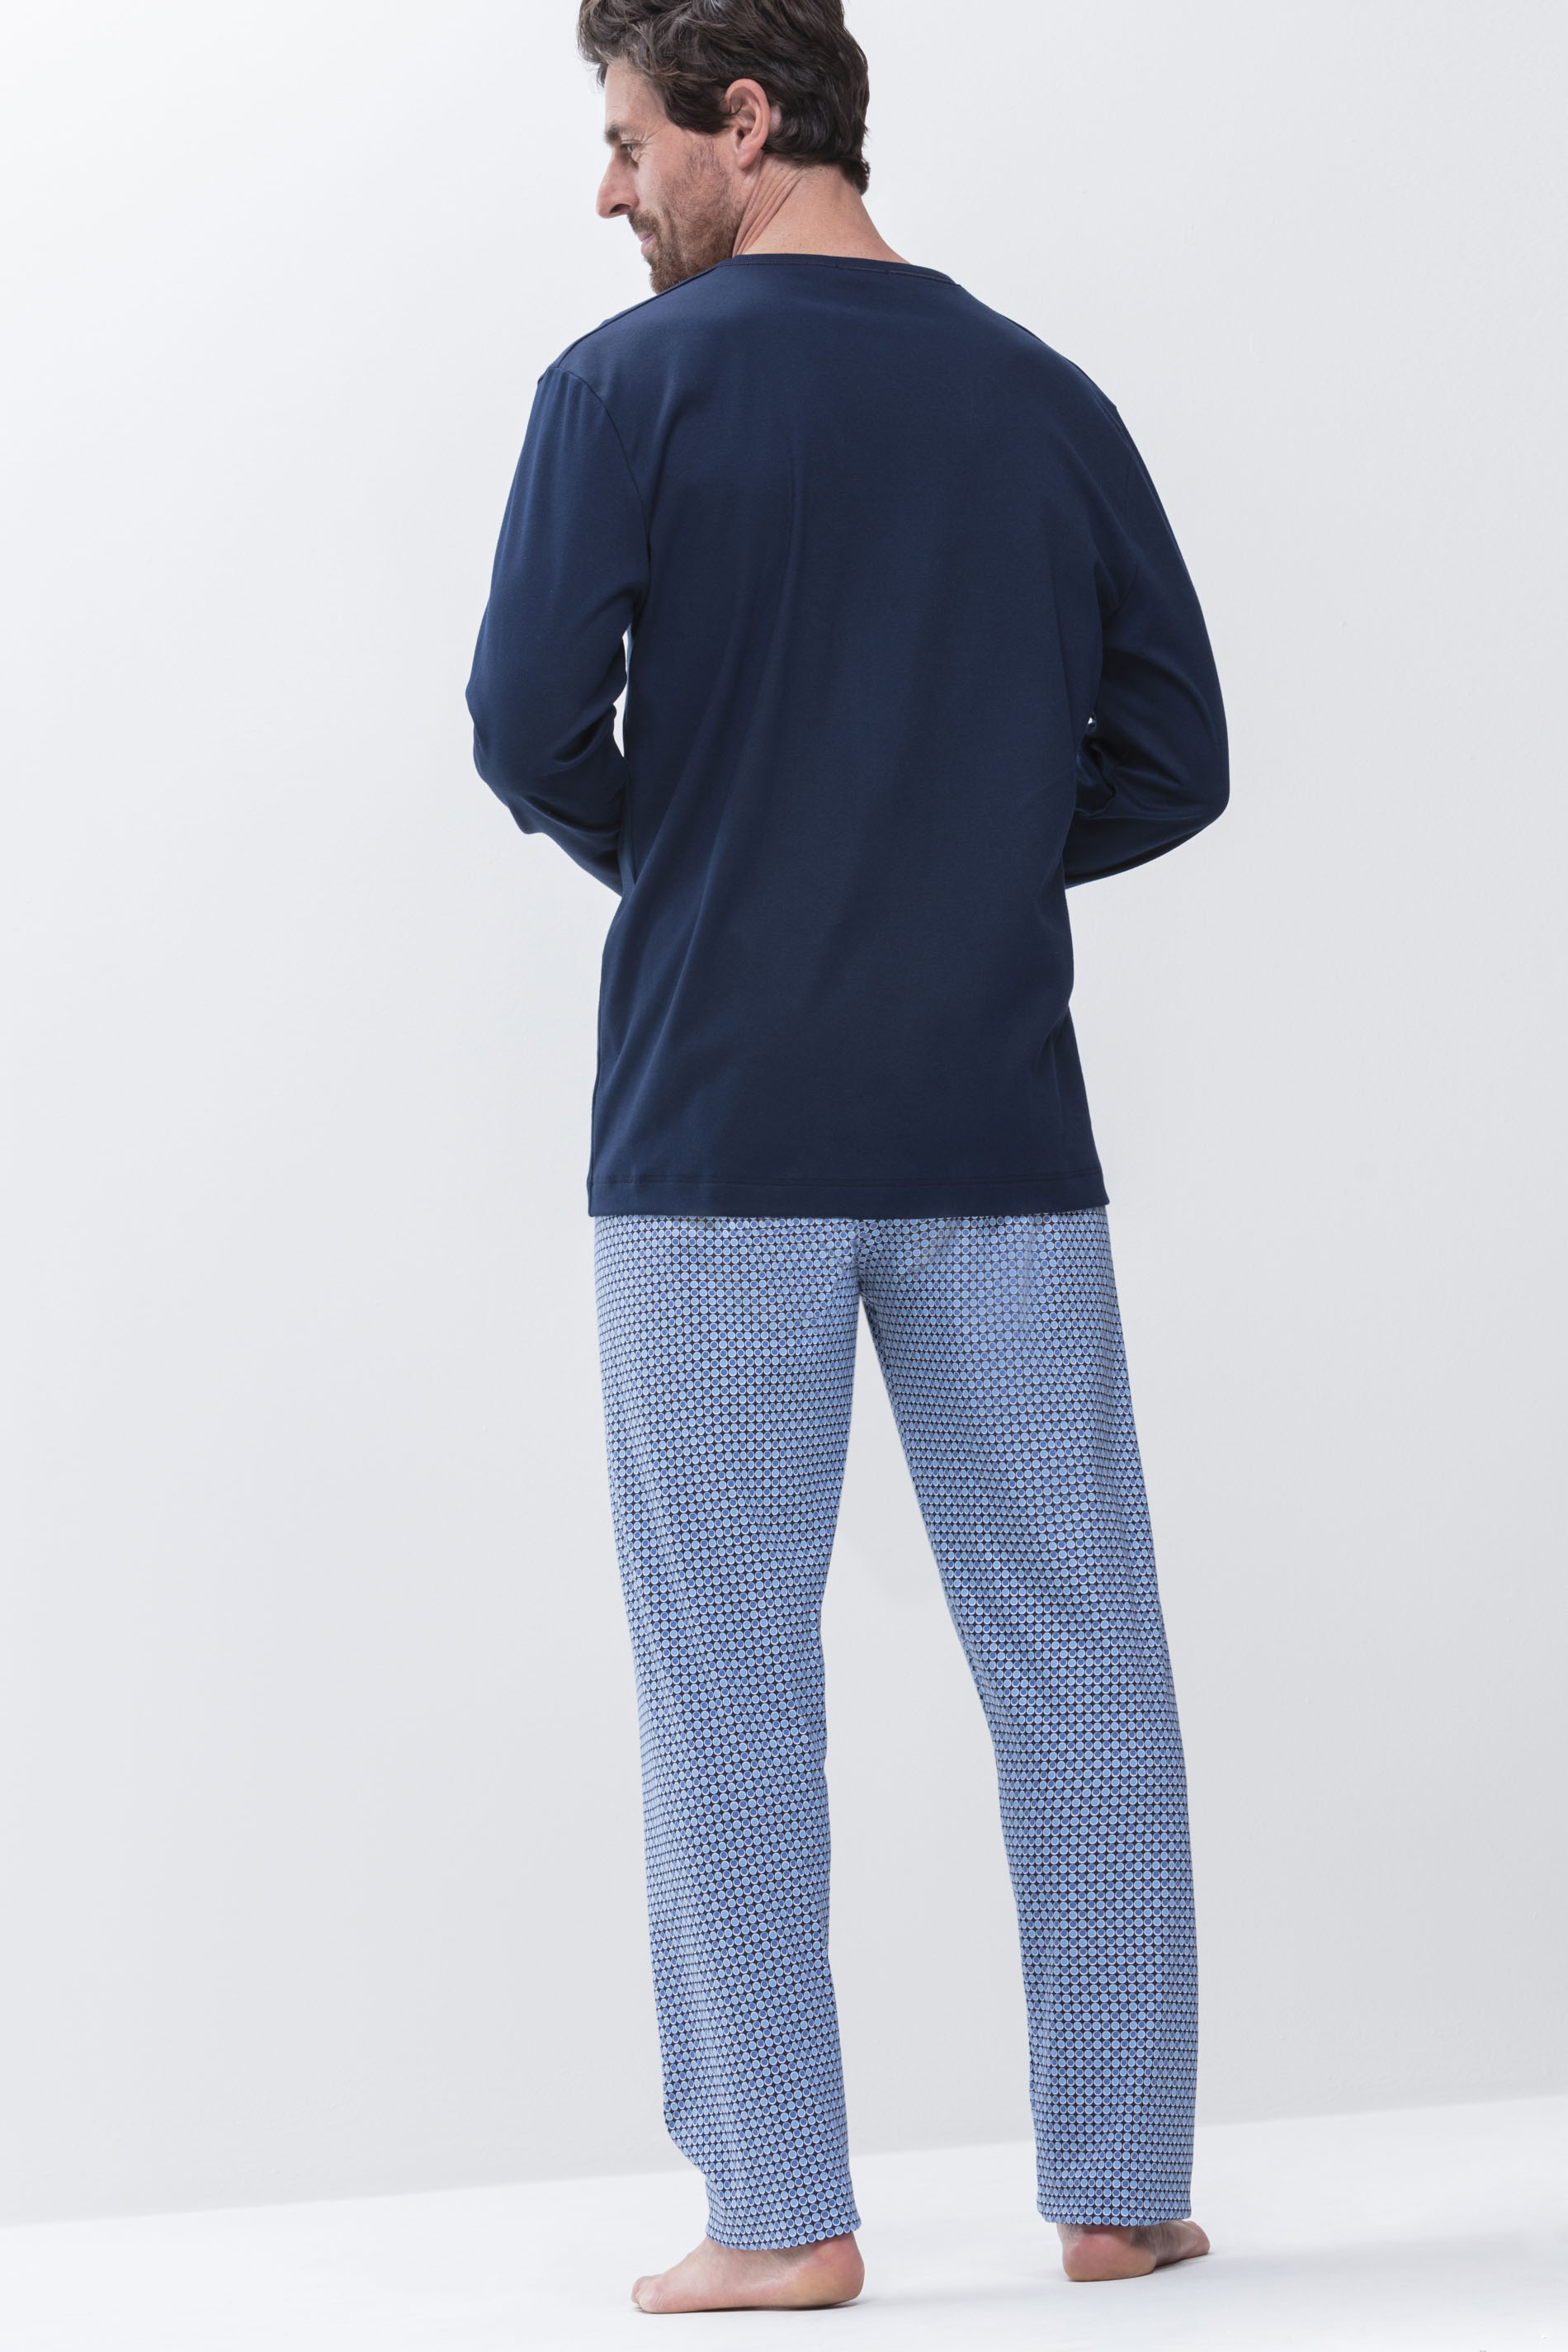 Pyjama Yacht Blue Serie Clyde Achteraanzicht | mey®